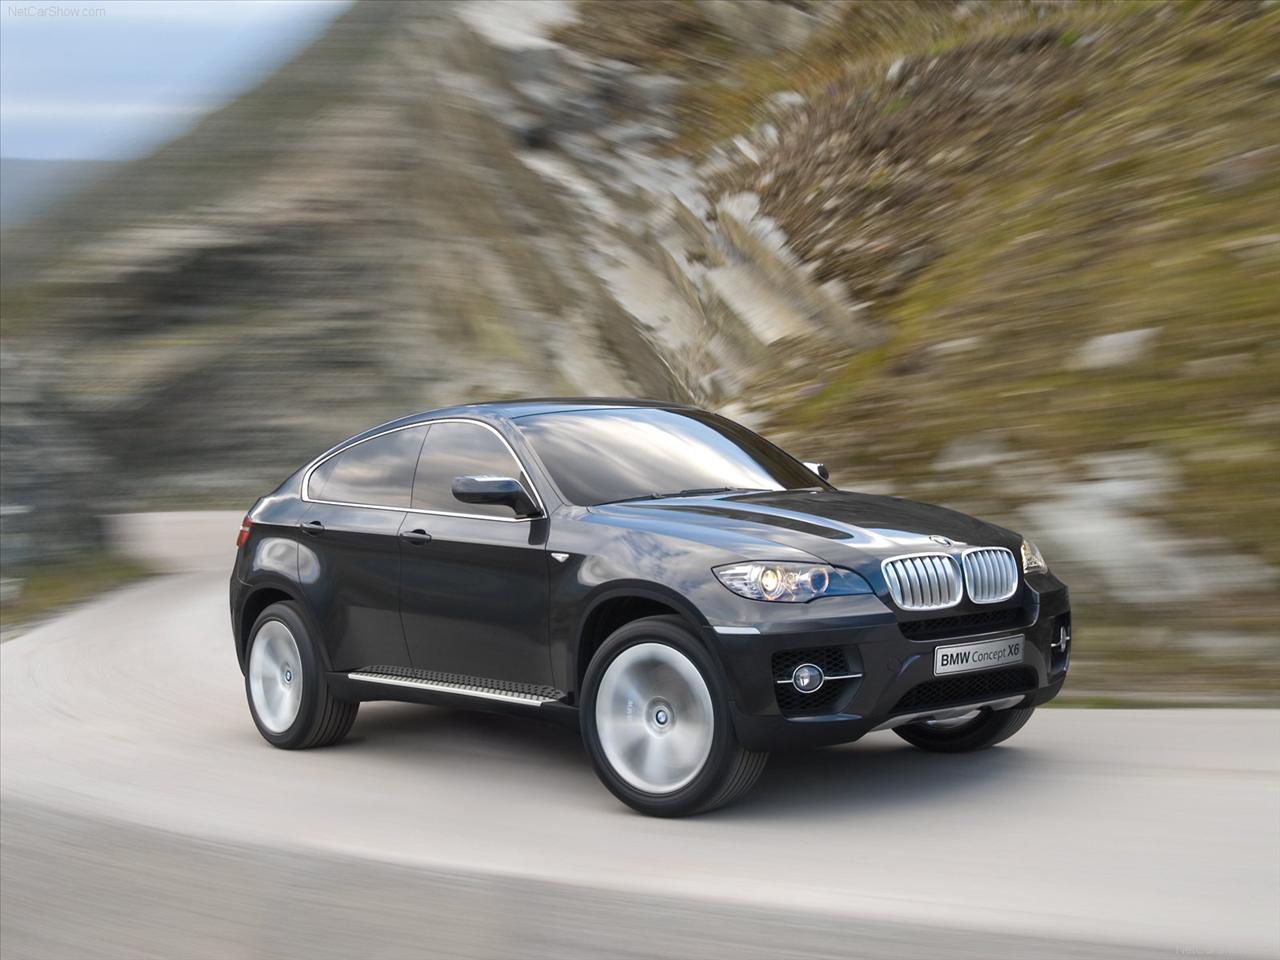  BMW X6 - BMW-X6_Concept_2007_1600x1200_wallpaper_02.jpg